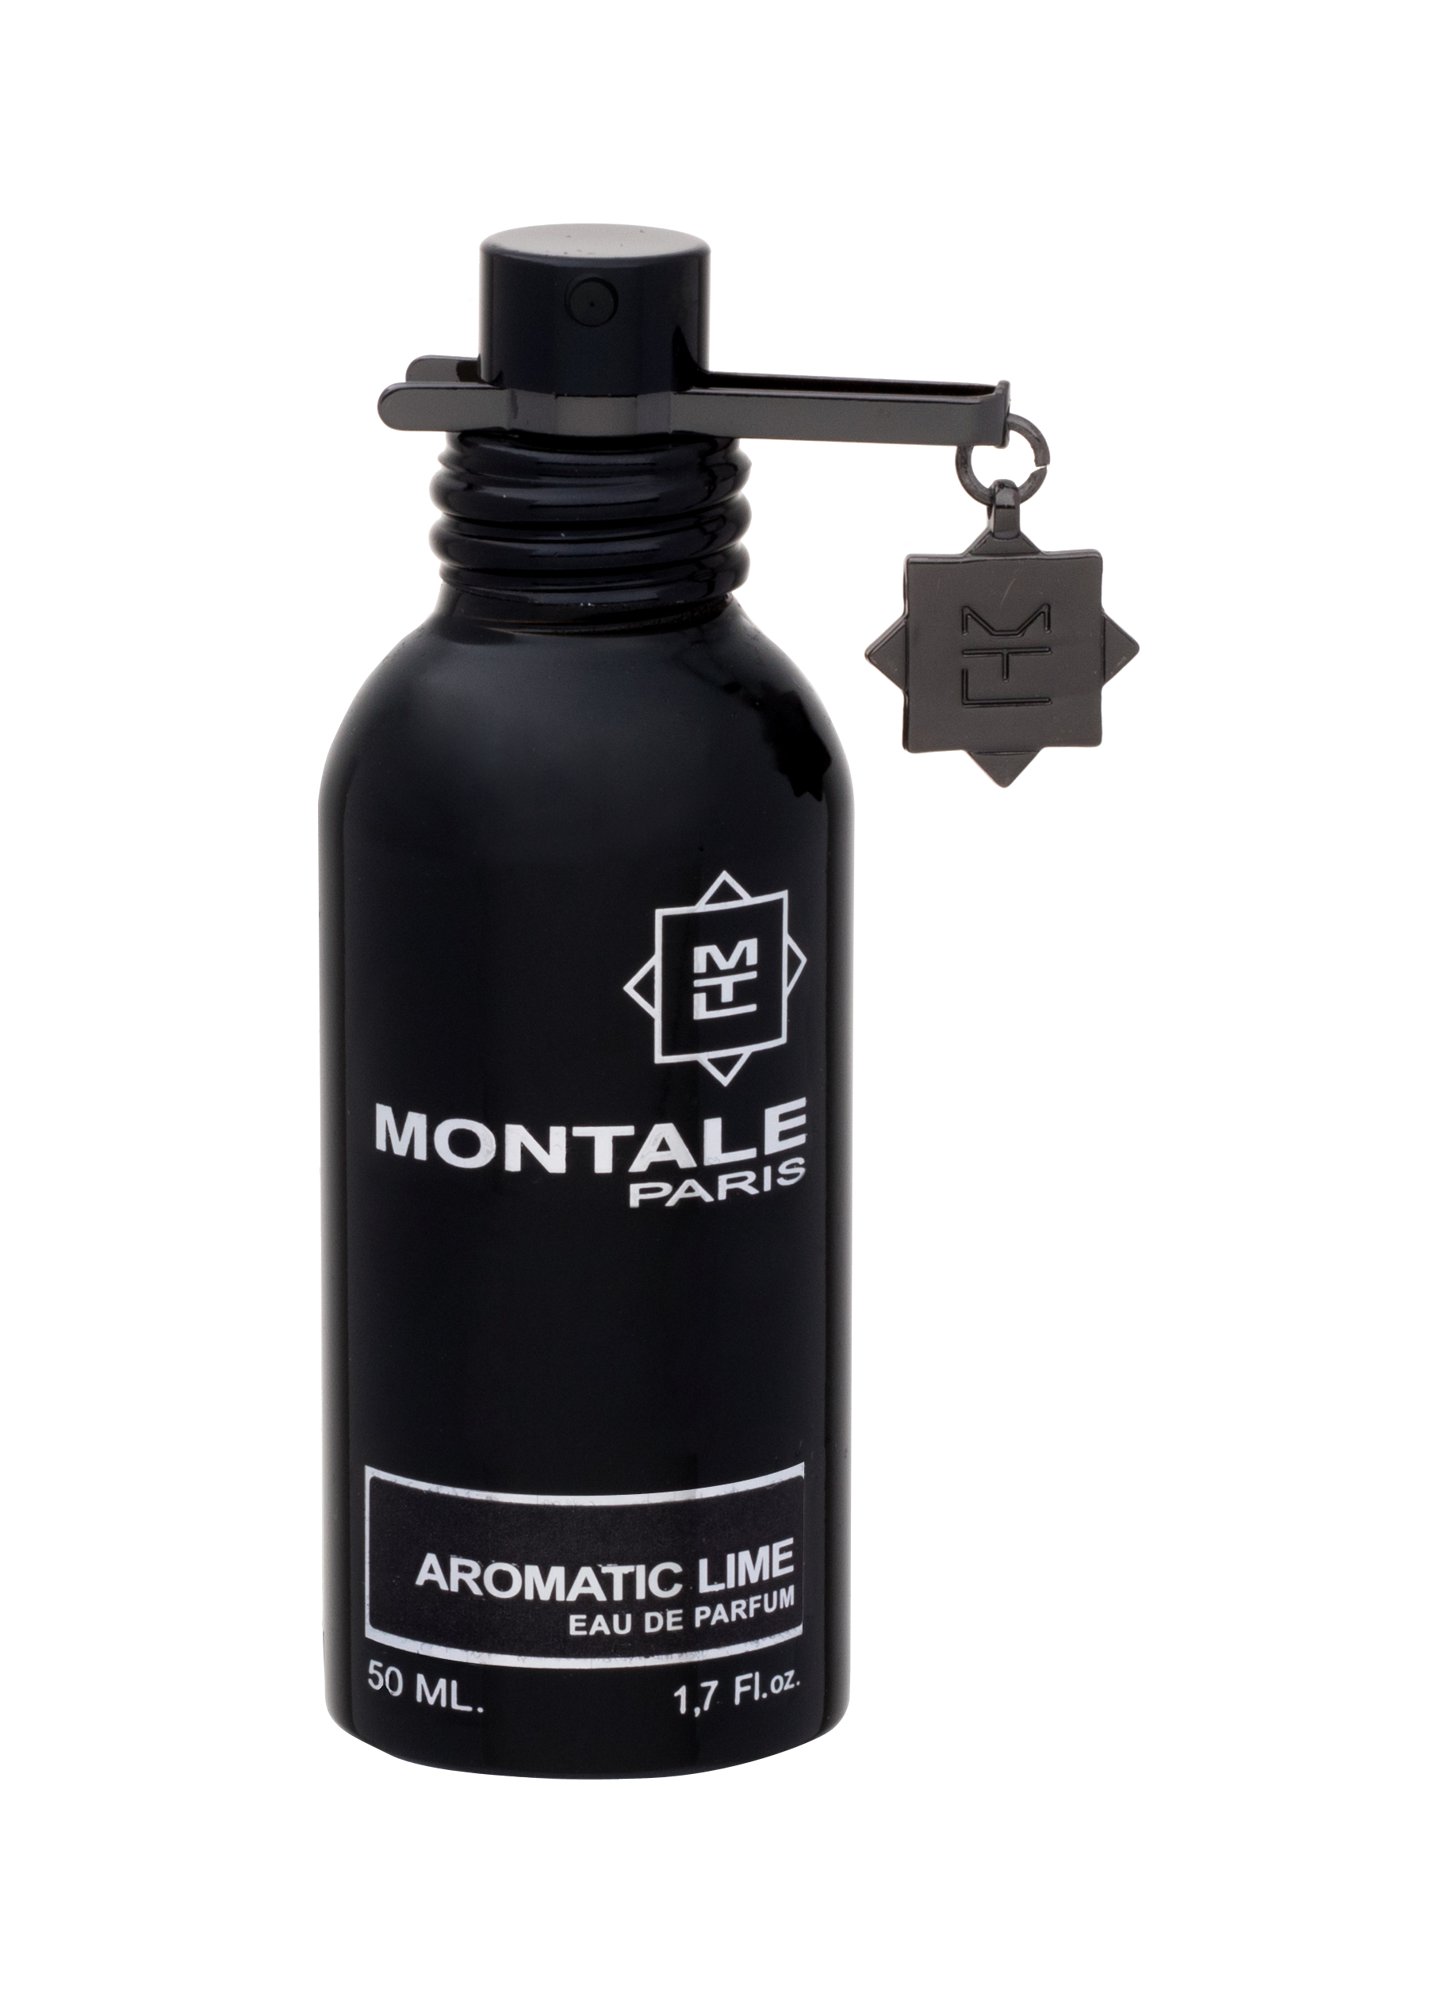 Montale Paris Aromatic Lime, EDP 50ml